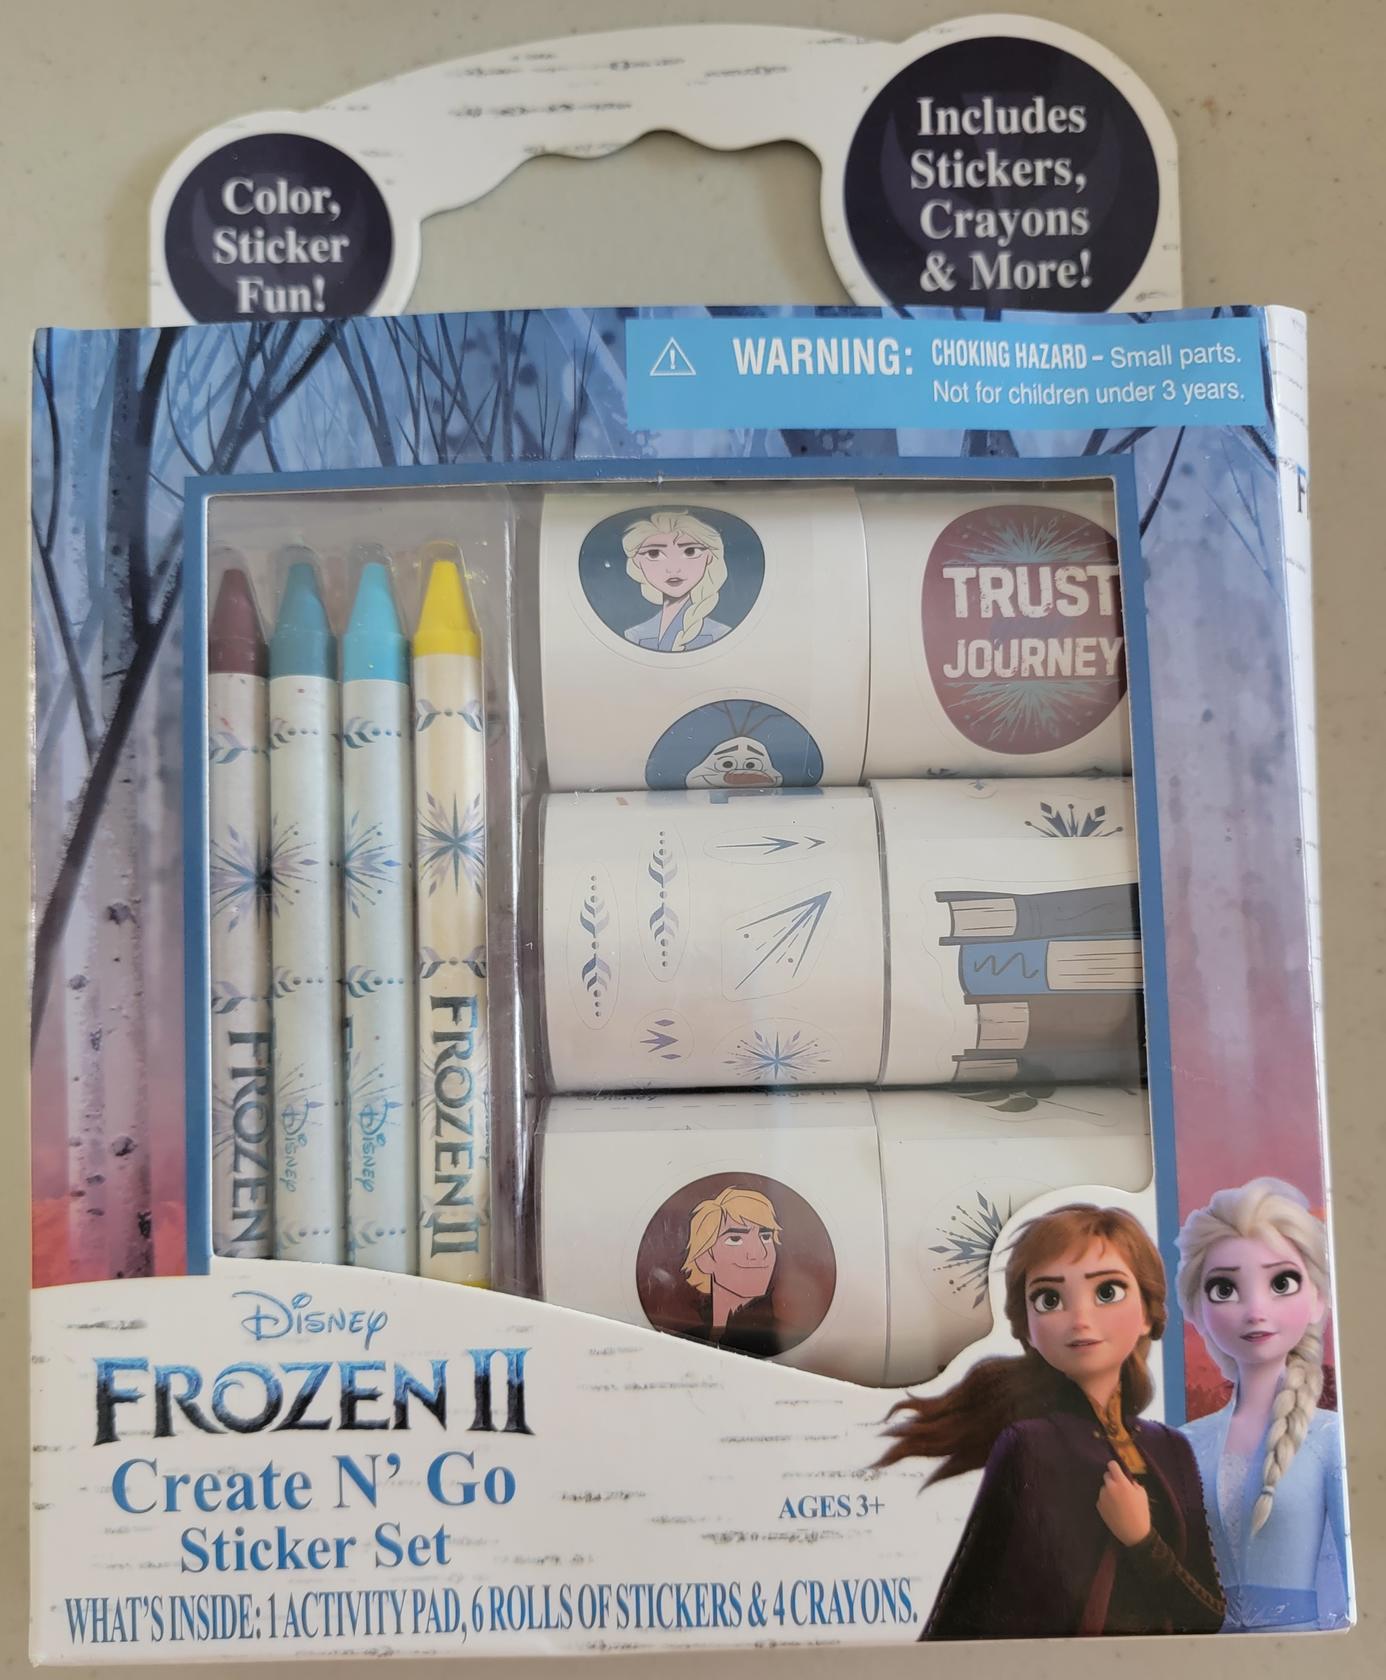 Disney Frozen II Create N' Go Sticker Set - image 2 of 2